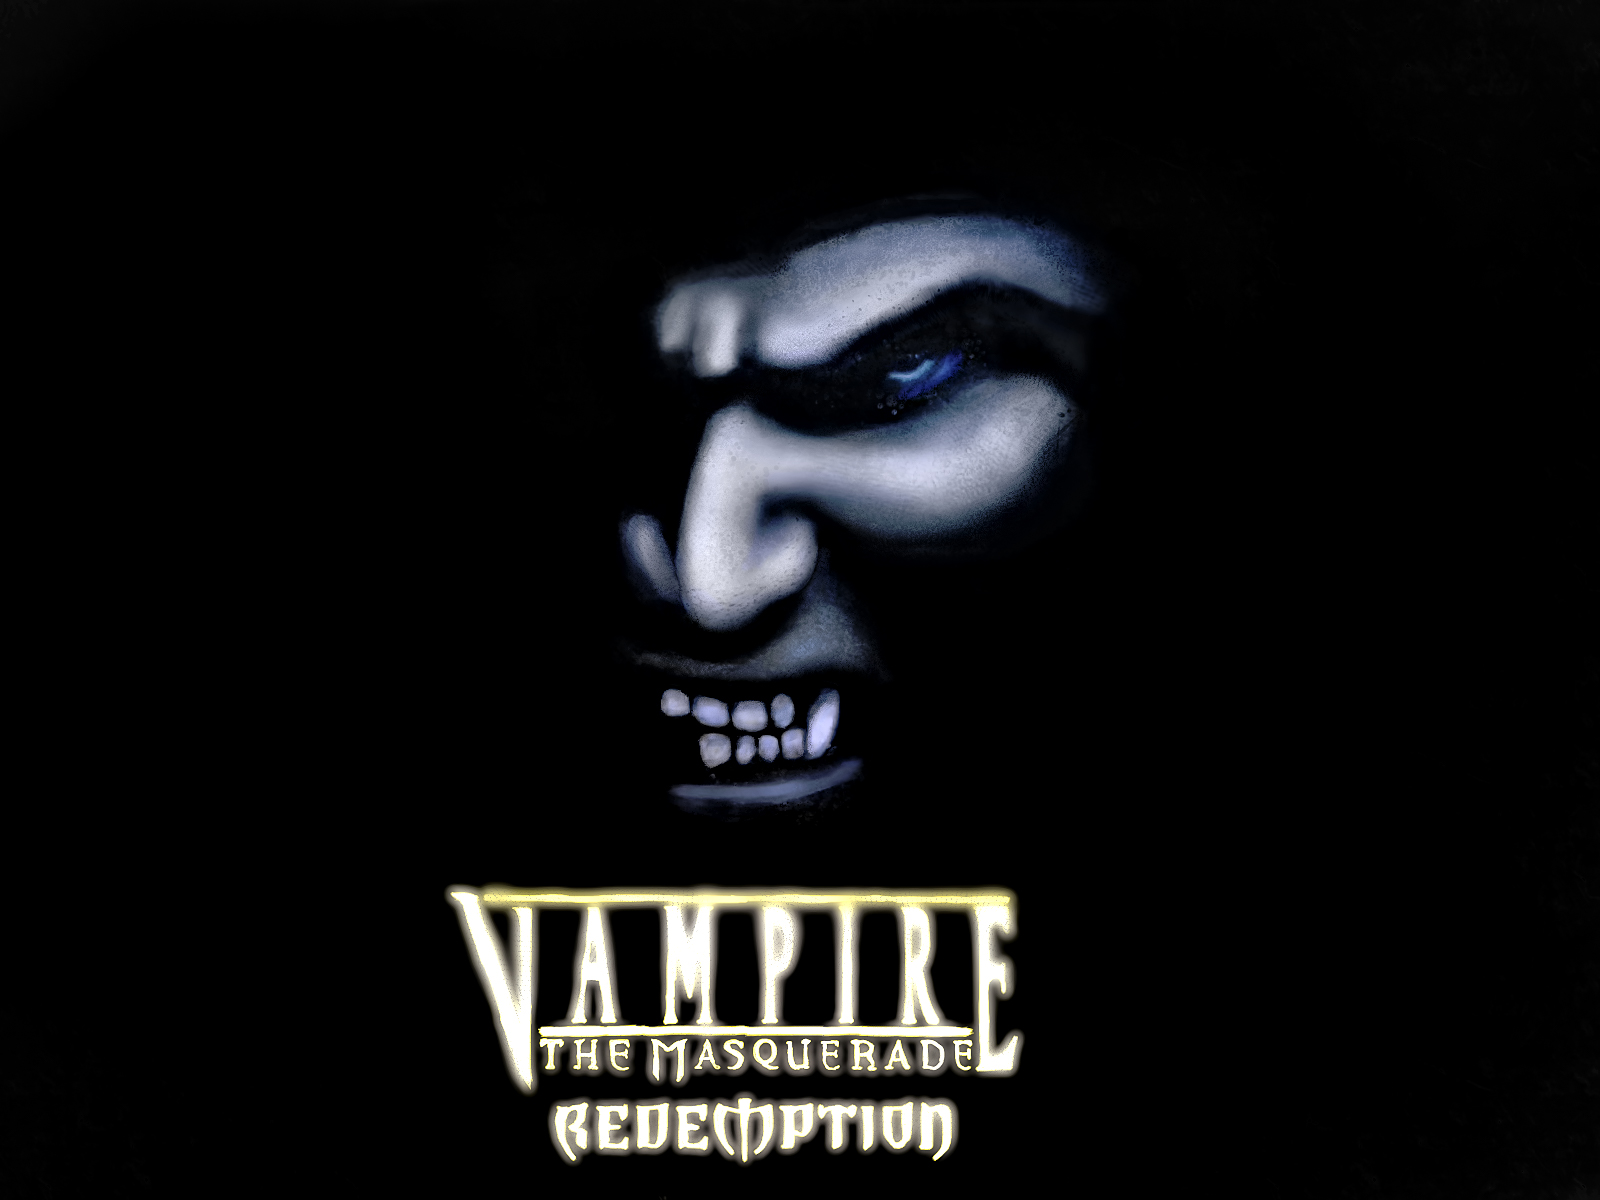 Vampire The Masquerade Redemption - Fan Art by corvoattano92 on